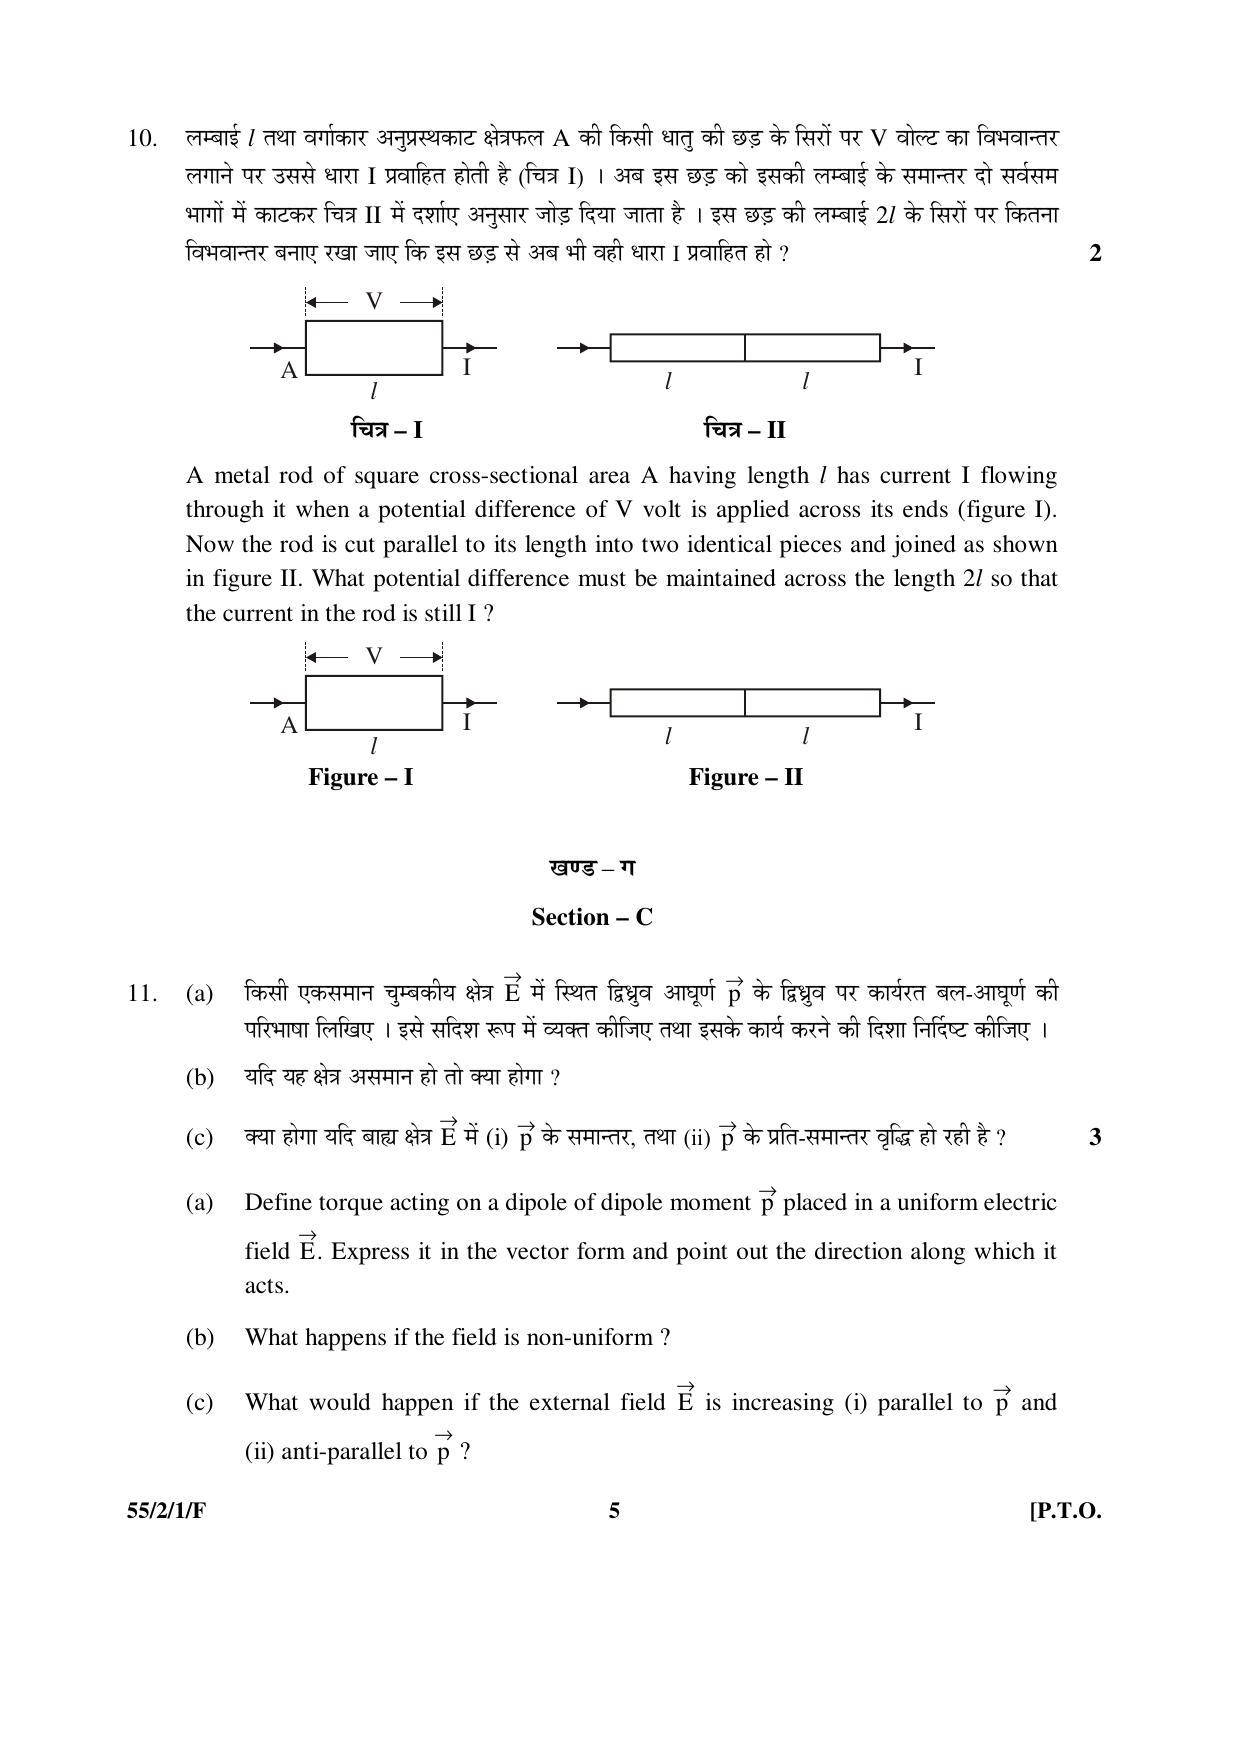 CBSE Class 12 55-2-1-F _Physics_SET-1 2016 Question Paper - Page 5